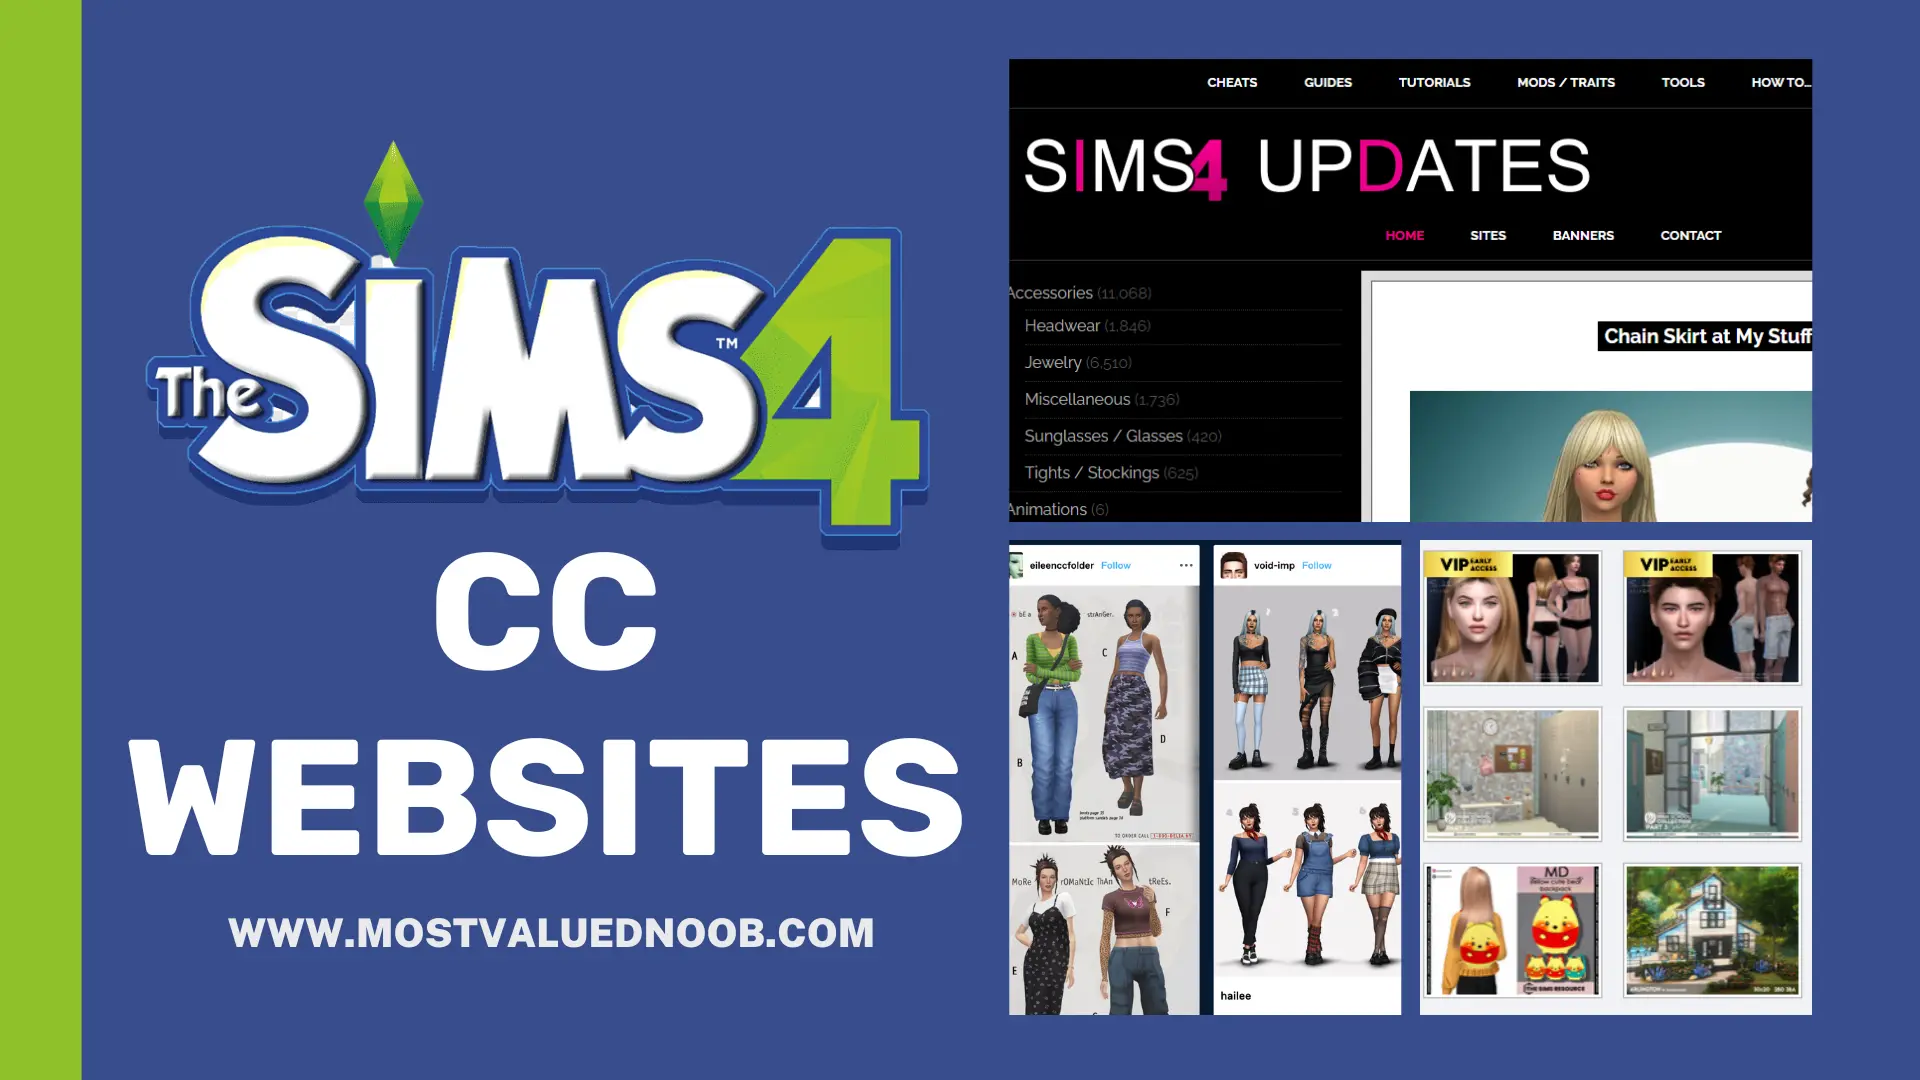 The Sims 4 CC Websites